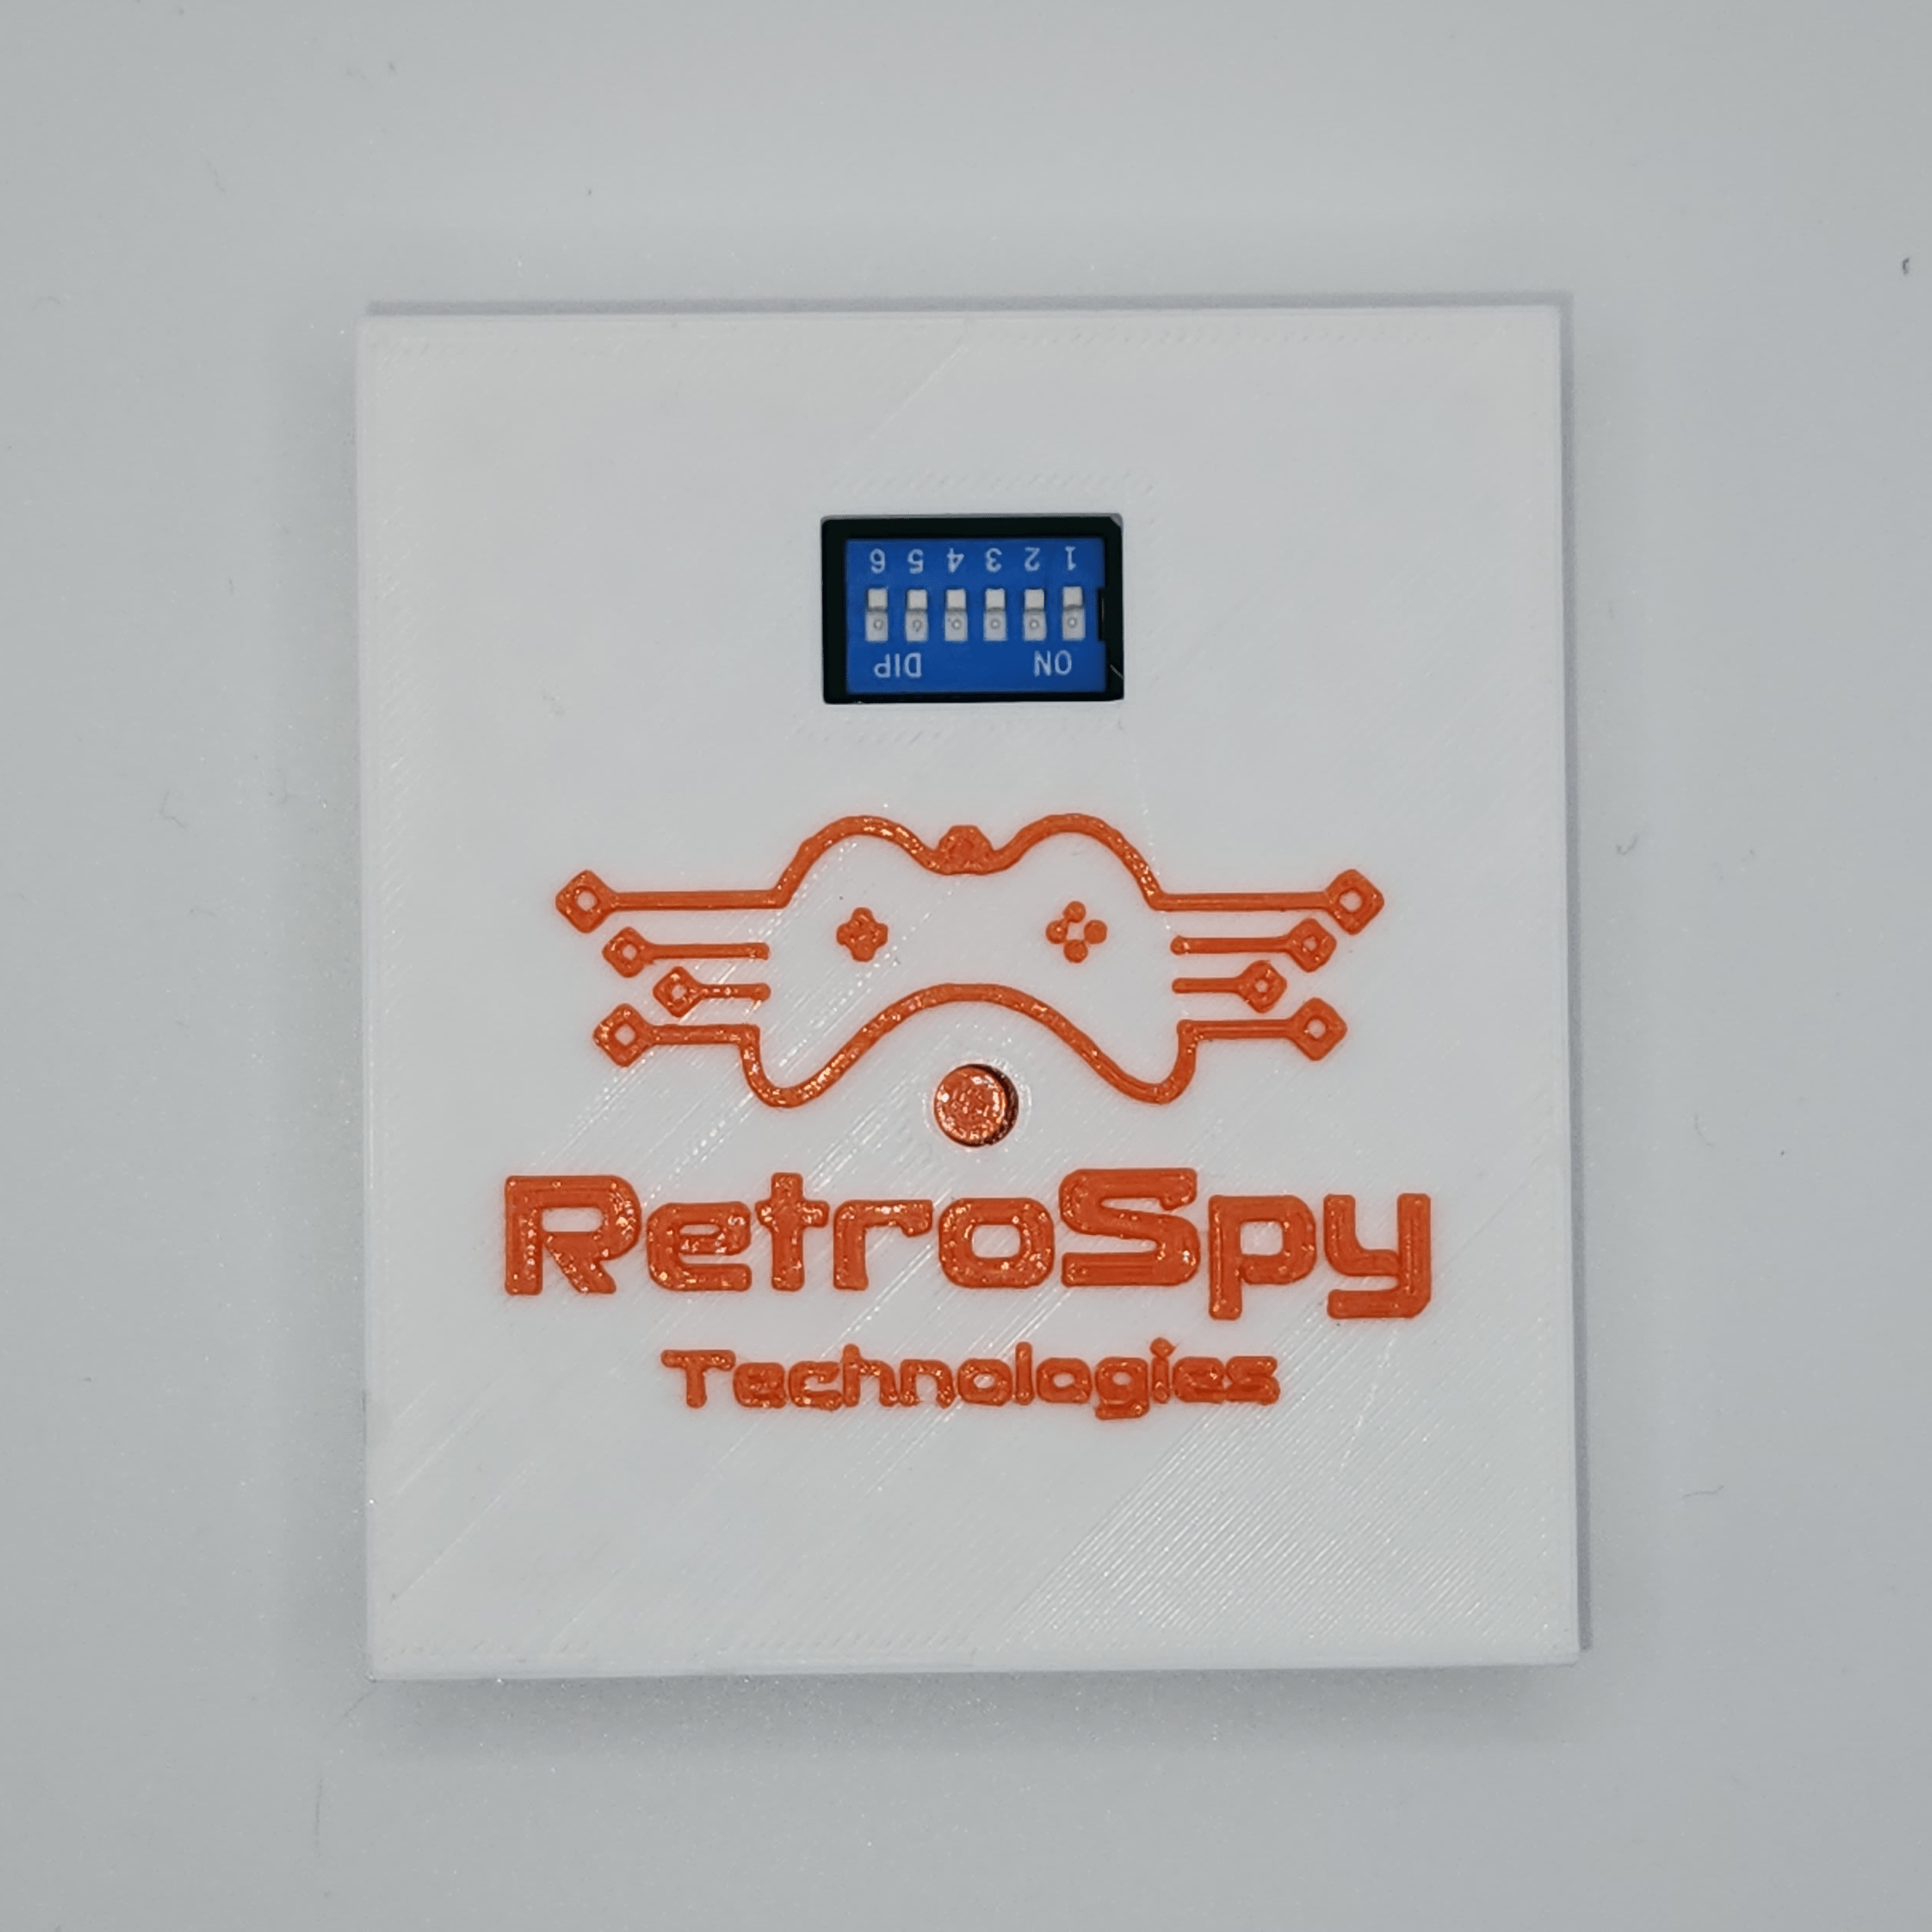 Top of RetroSpy Vision Dream Input Display